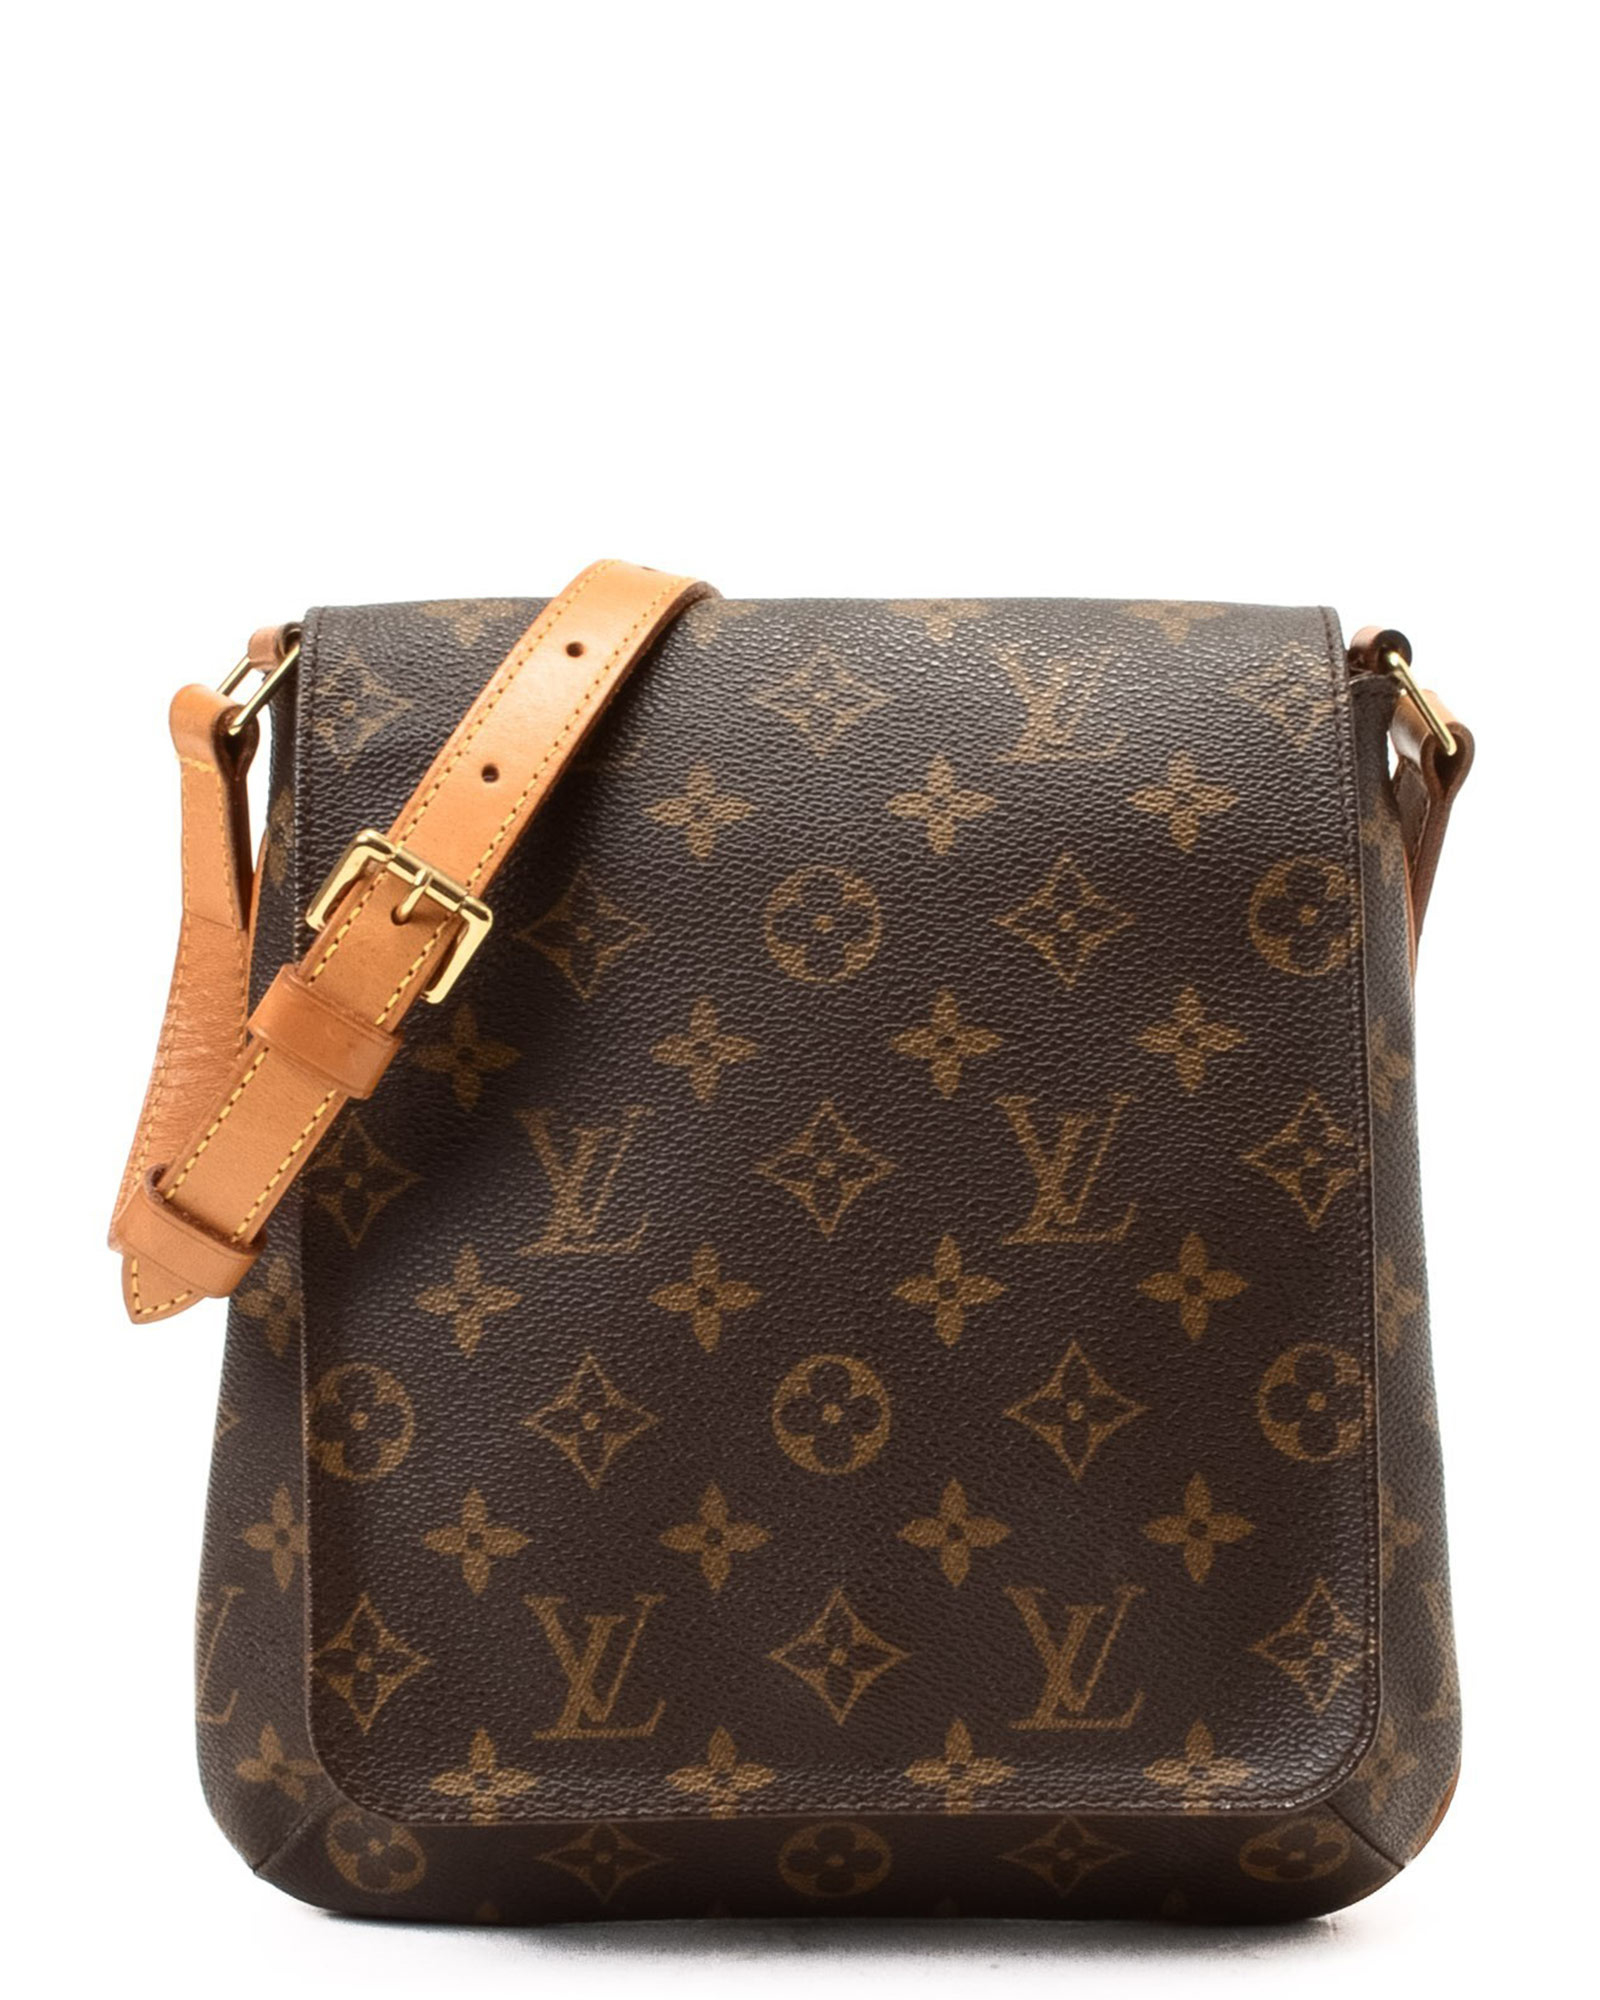 Lyst - Louis Vuitton Coated Canvas Shoulder Bag - Vintage in Brown